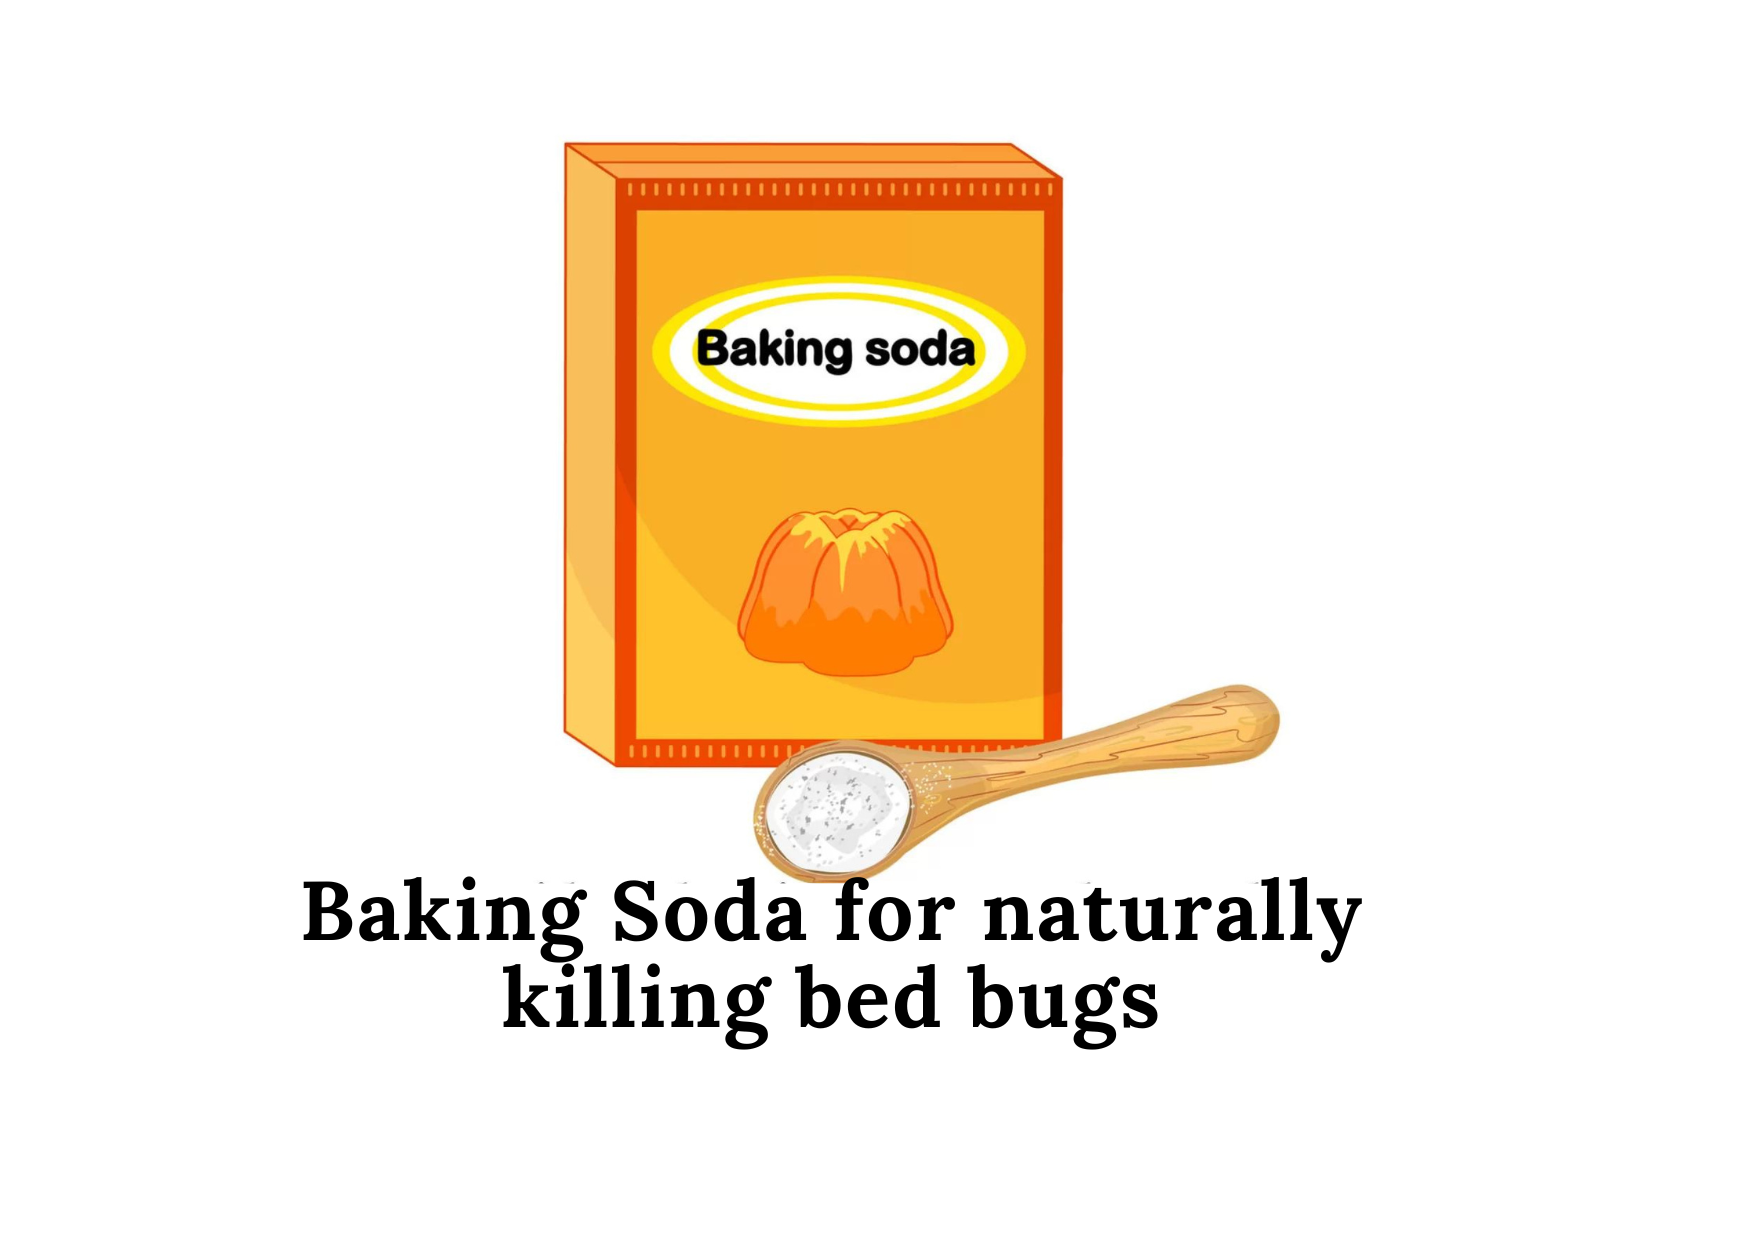 Baking Soda for naturally killing bed bugs